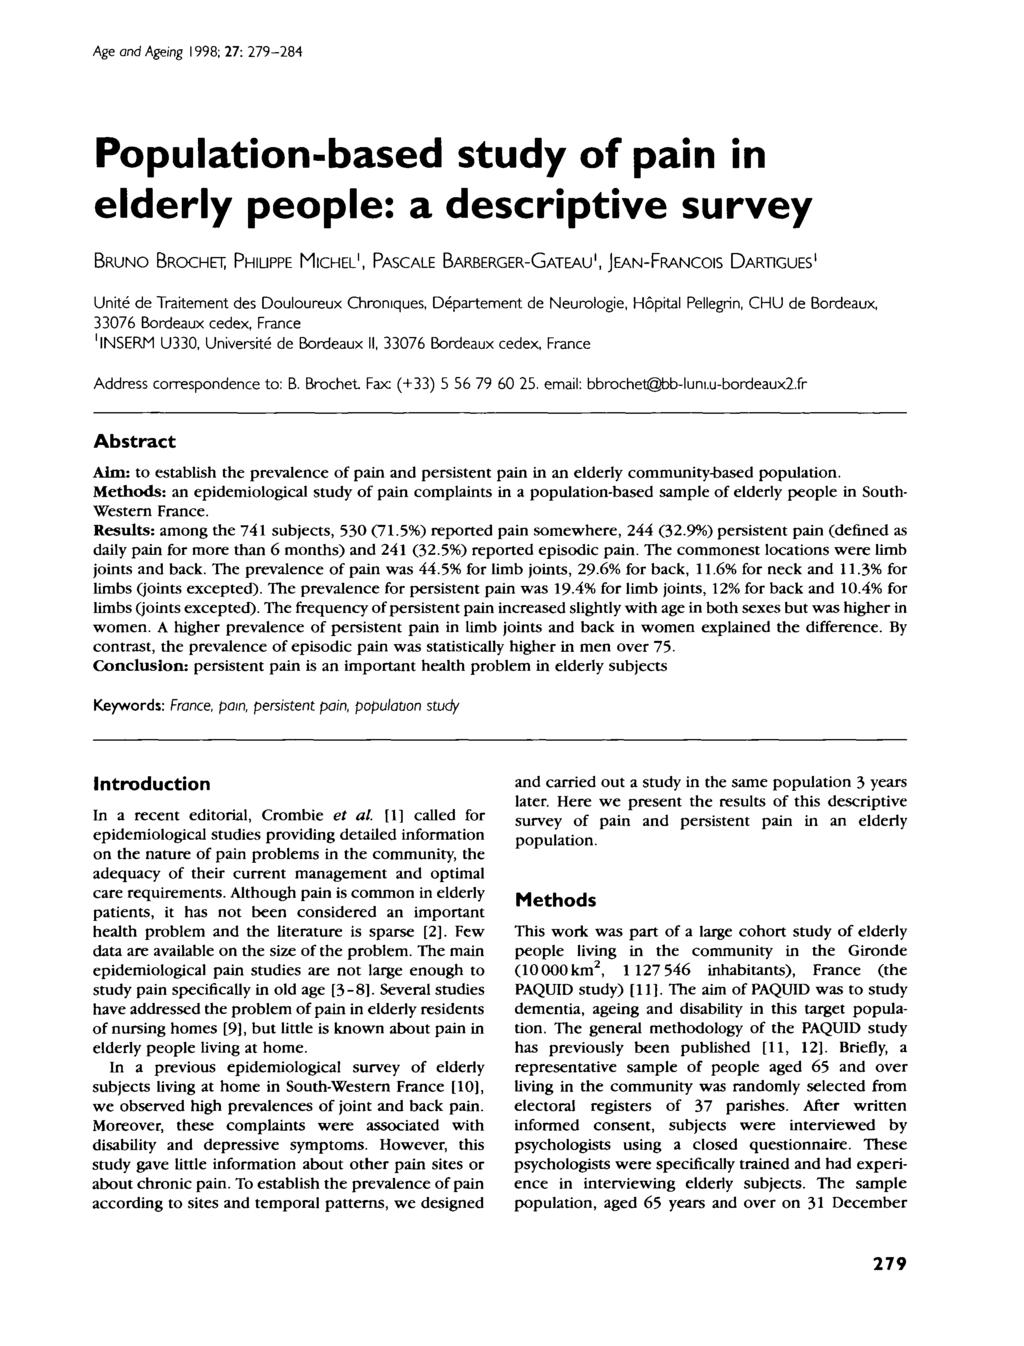 Age and Ageing 1998; 27: 279-284 Population-based study of pain in elderly people: a descriptive survey BRUNO BROCHET PHILIPPE MICHEL 1, PASCALE BARBERGER-GATEAU 1, JEAN-FRANCOIS DARTIGUES 1 Unite de